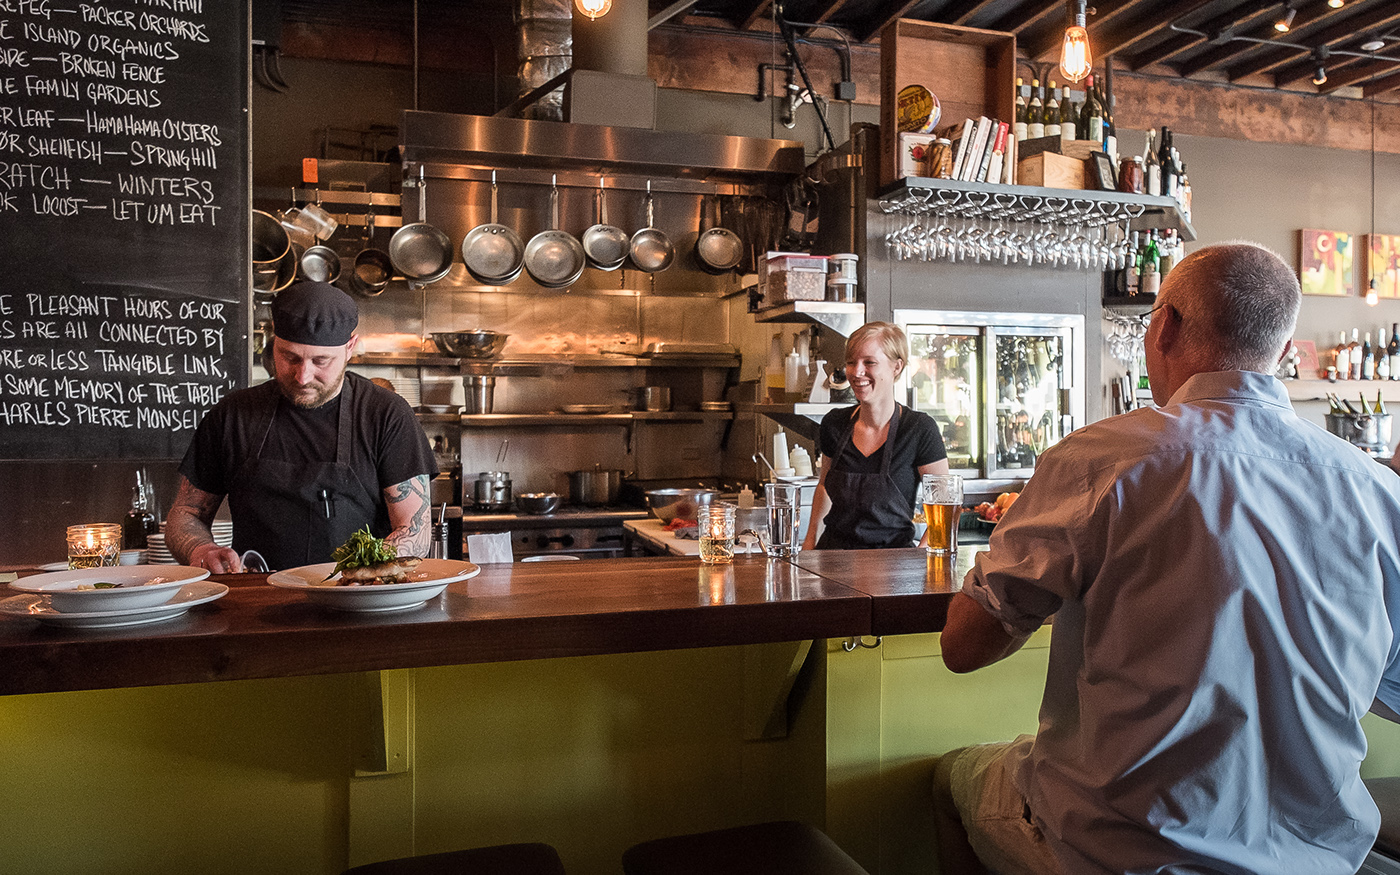 Bar Avignon restaurant Portland pdx Oregon feature Willamette Week environment location Food  lifestyle still life dining